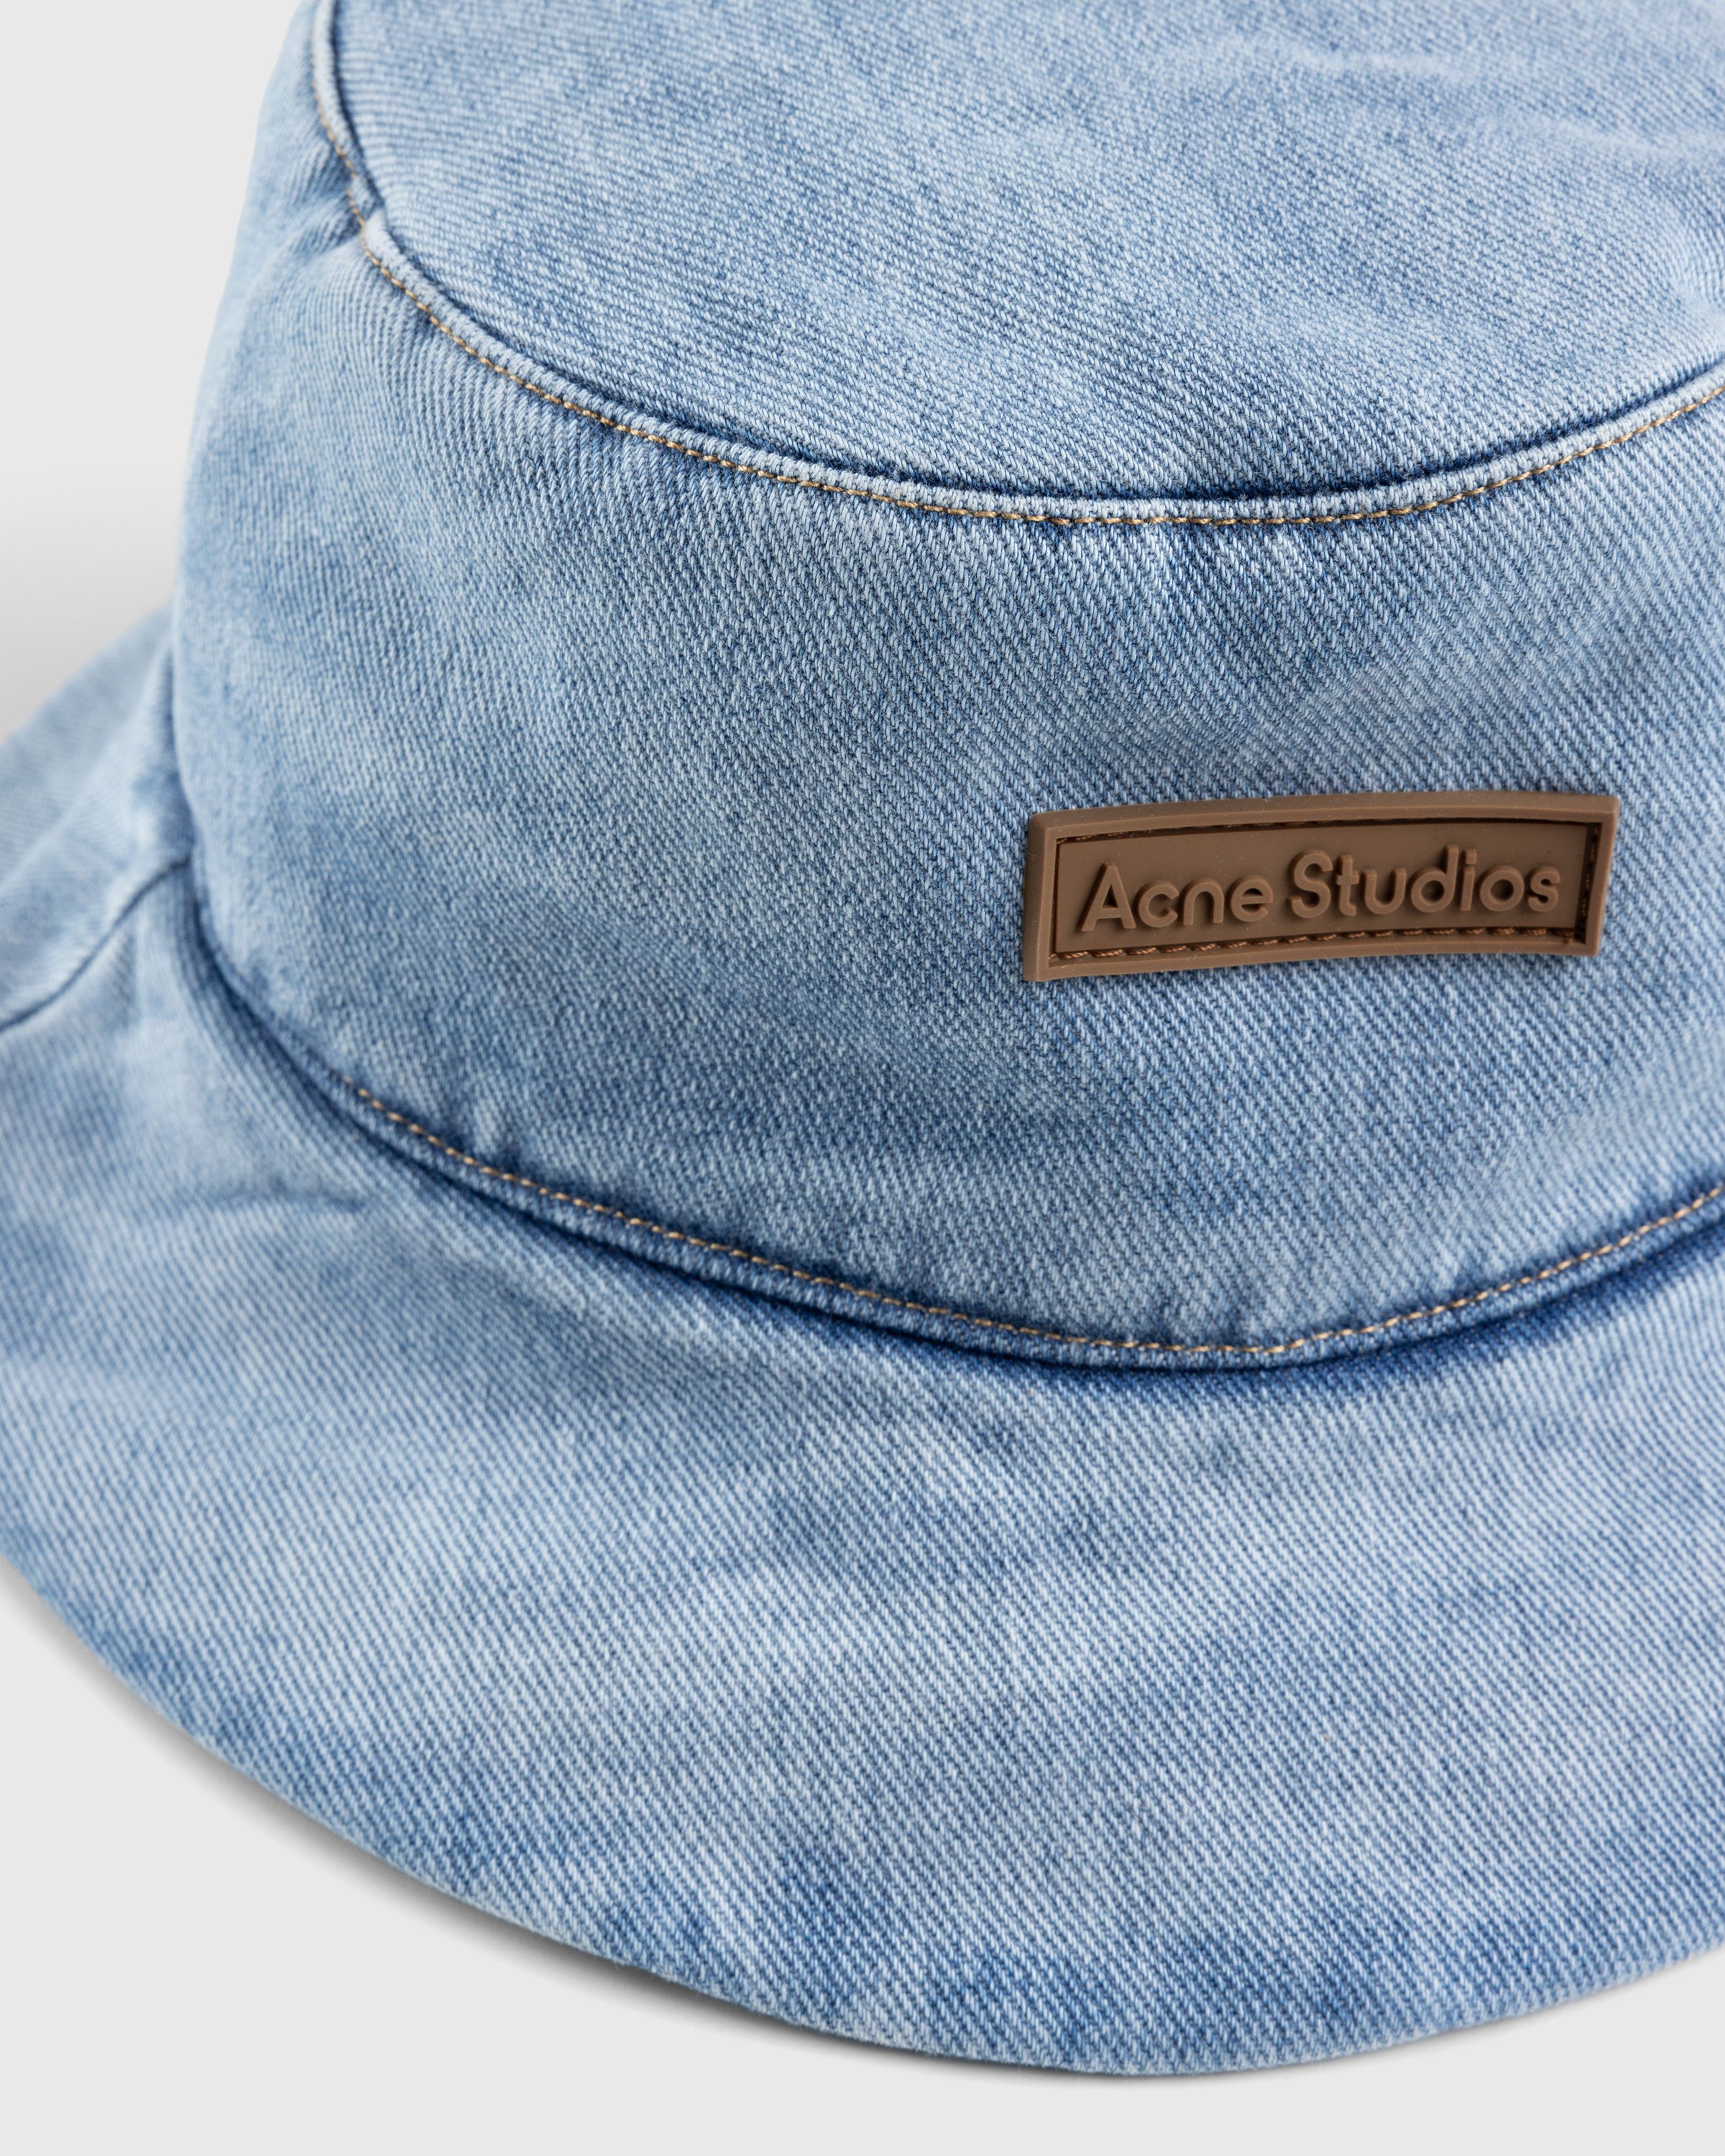 Acne Studios - Fuzzy Bucket Hat Blue  - Accessories - Blue - Image 3